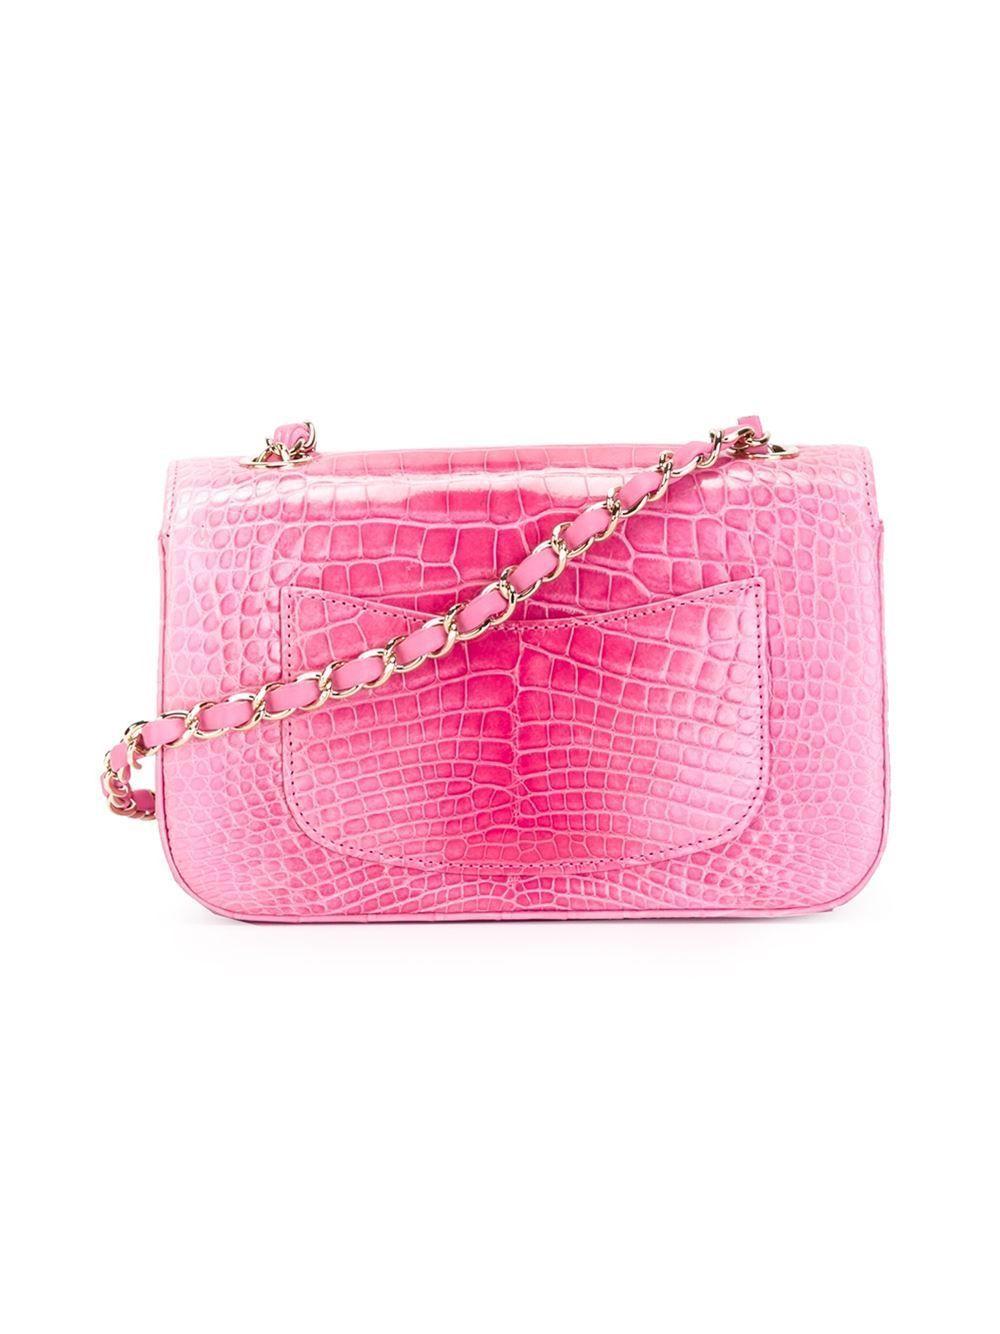 Crocodile with Pink Logo - Chanel Pink Crocodile Shoulder Bag at 1stdibs